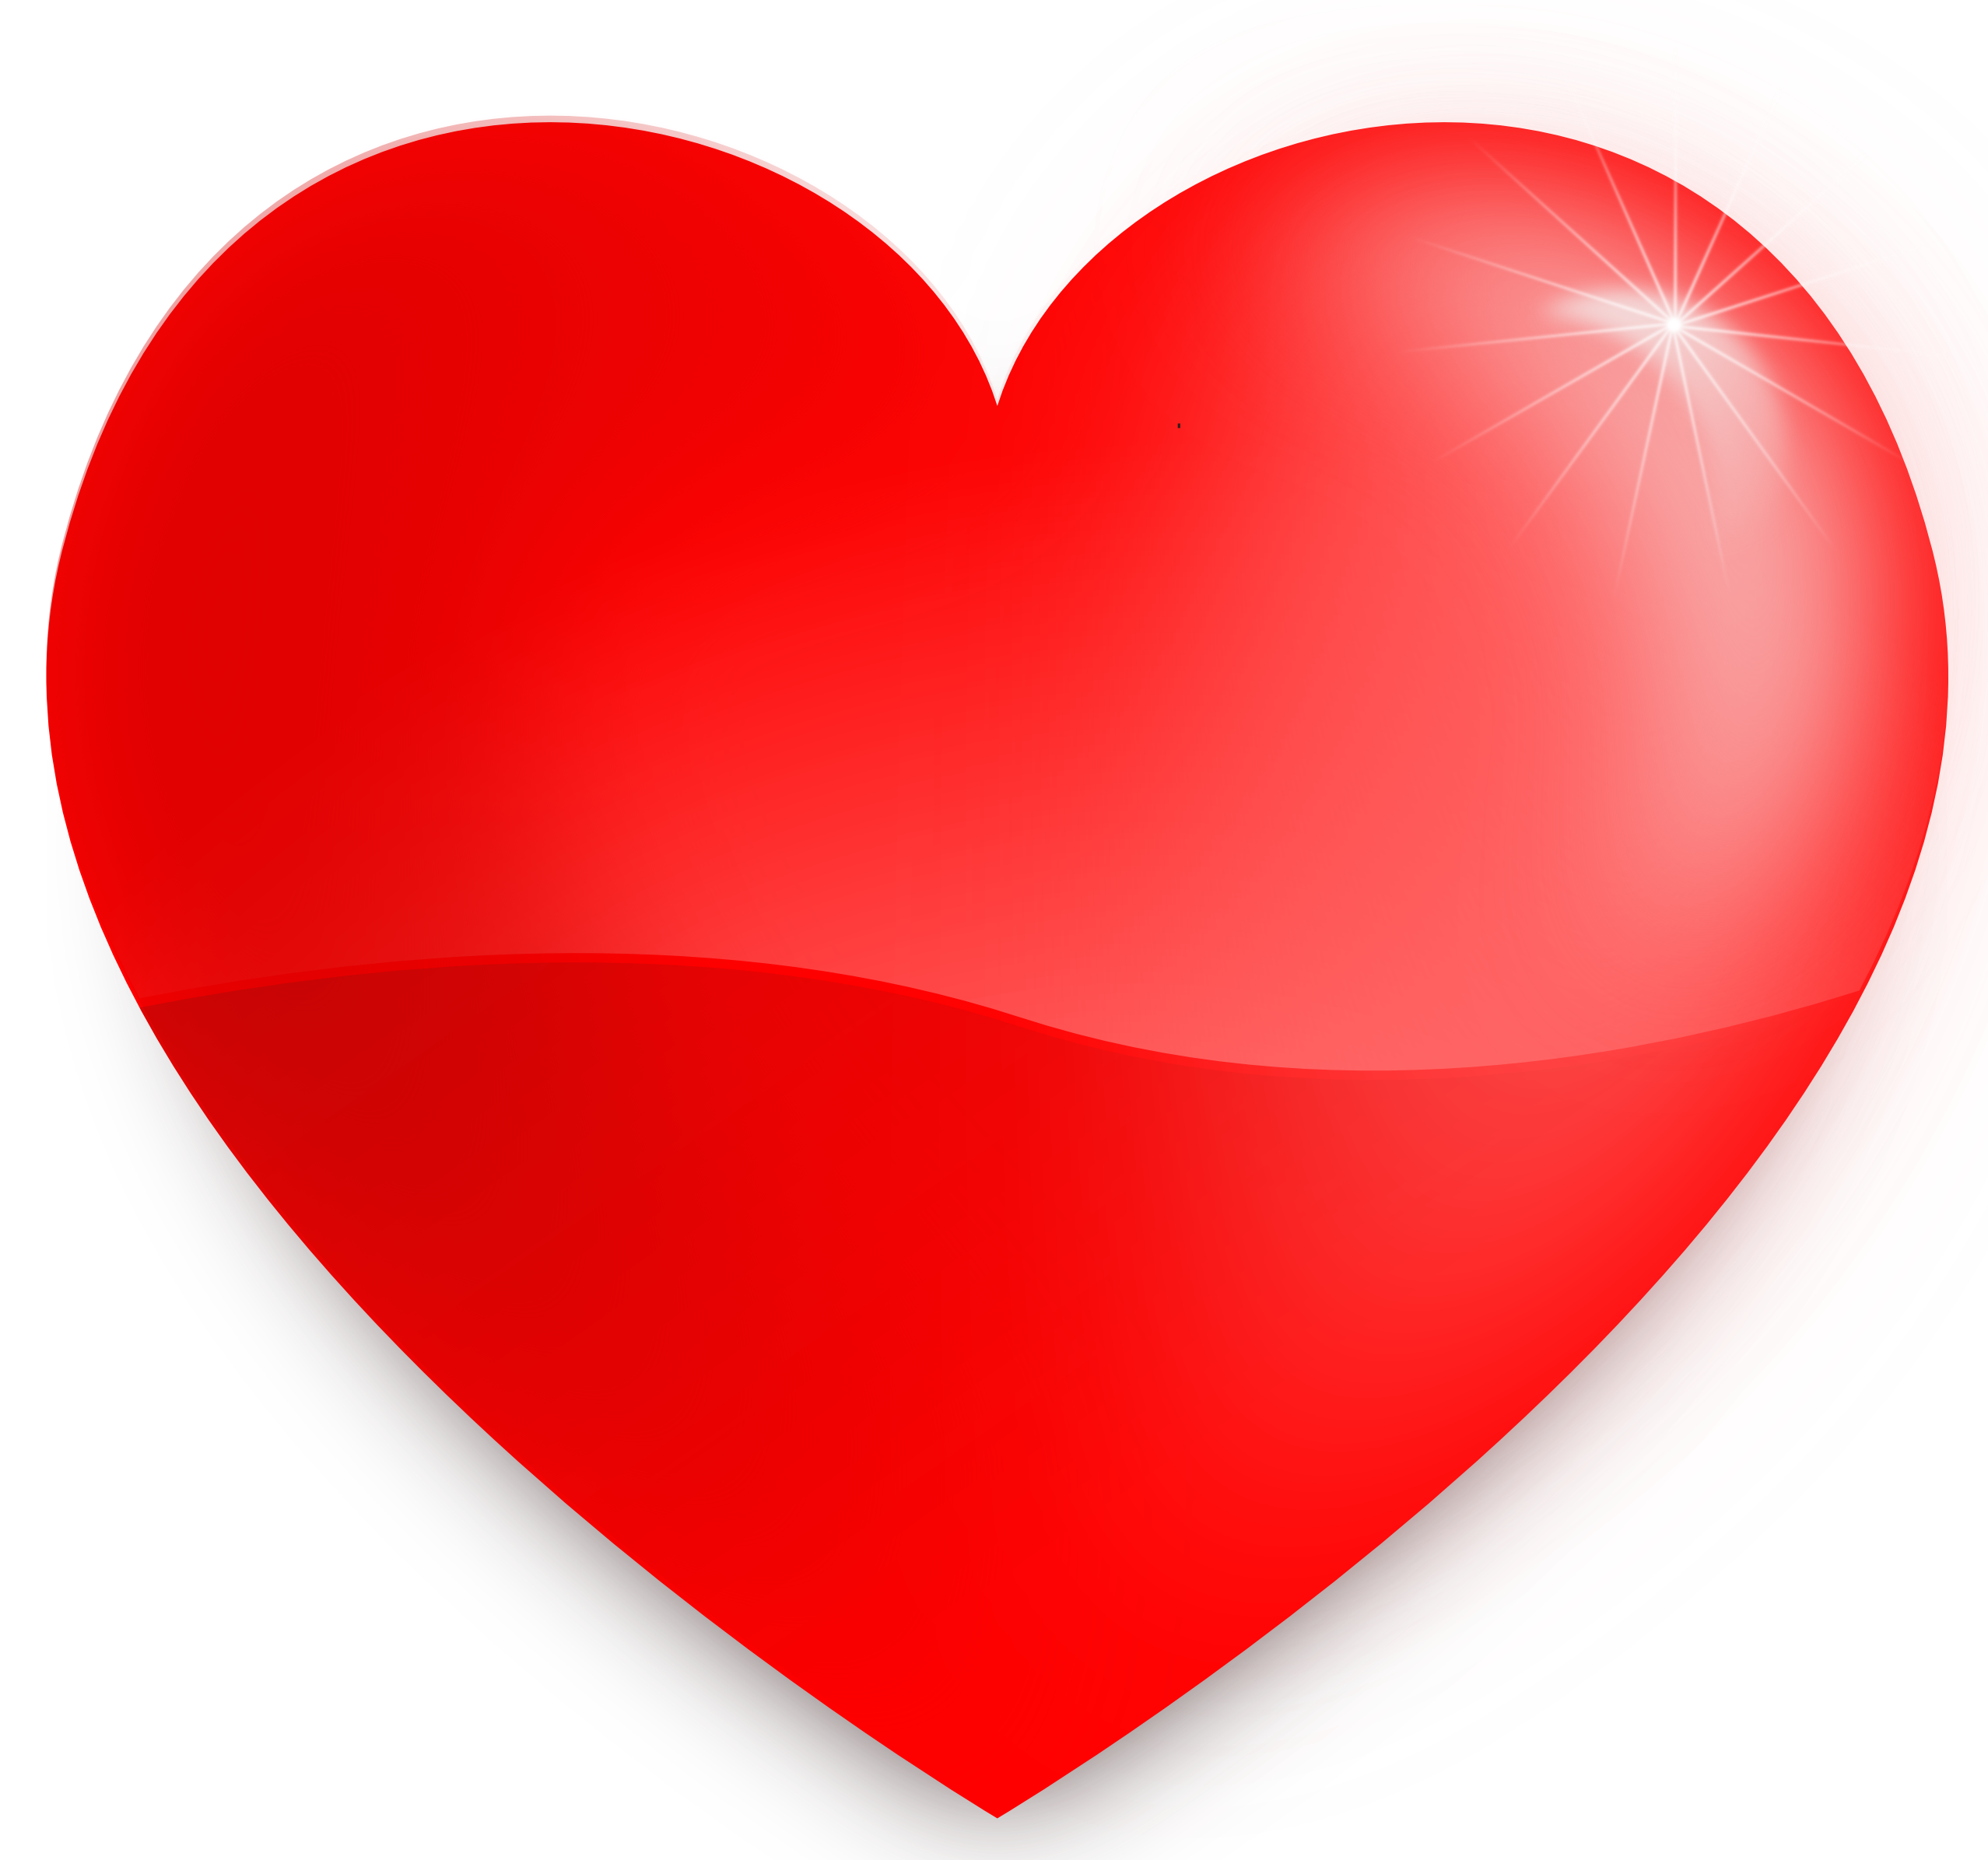 Love Artwork Heart Download PNG Image